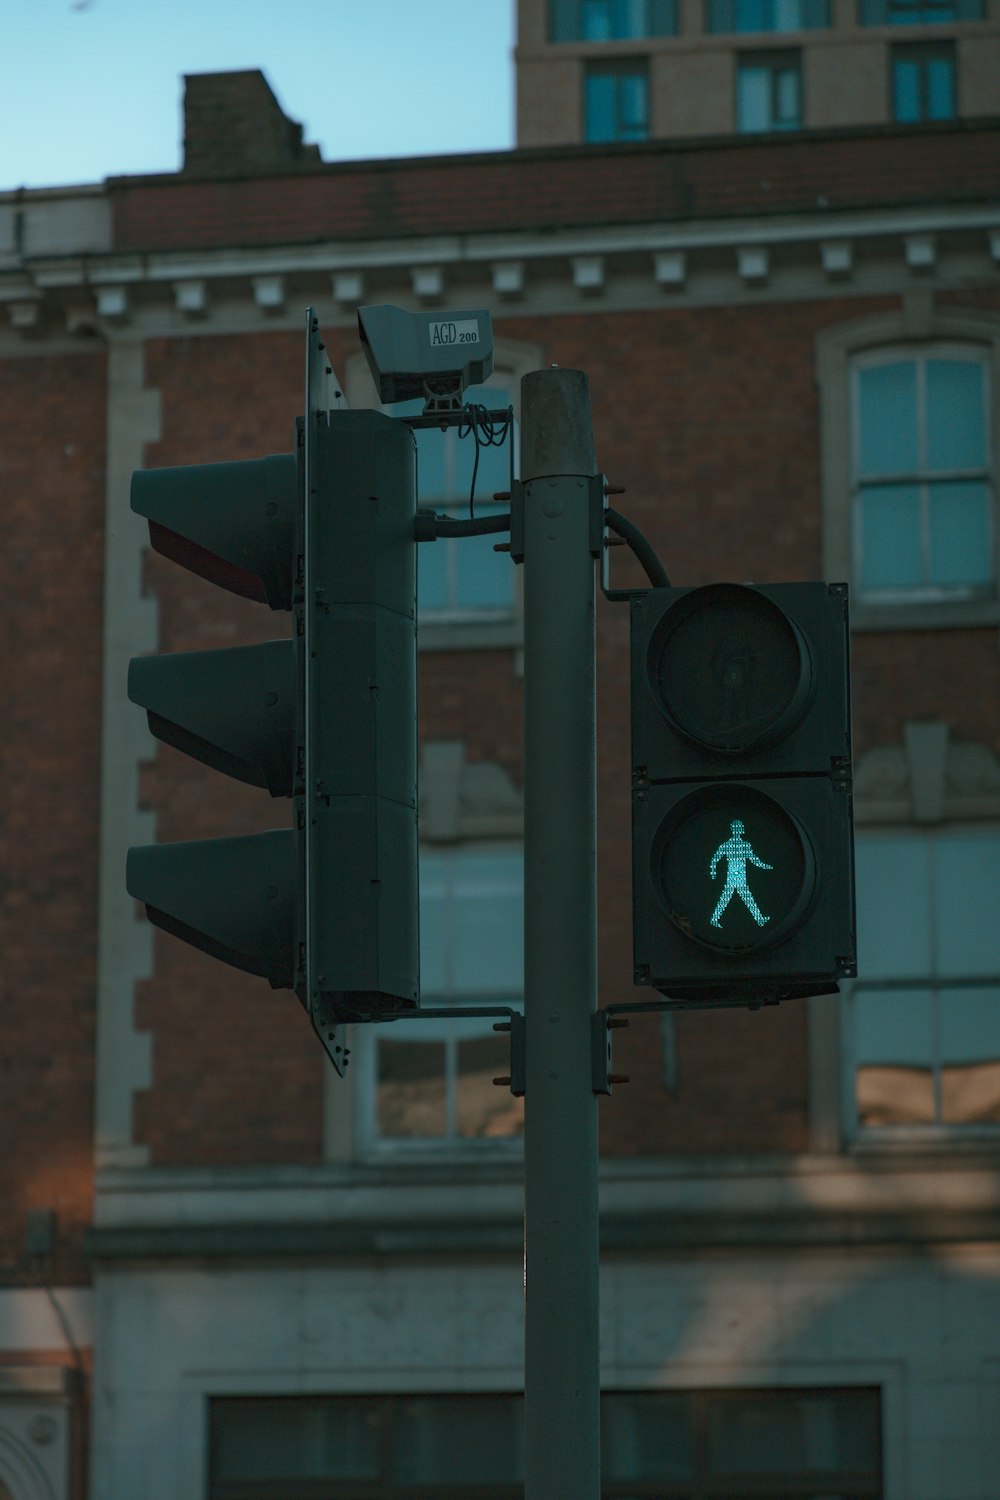 a traffic light with a green pedestrian crossing signal